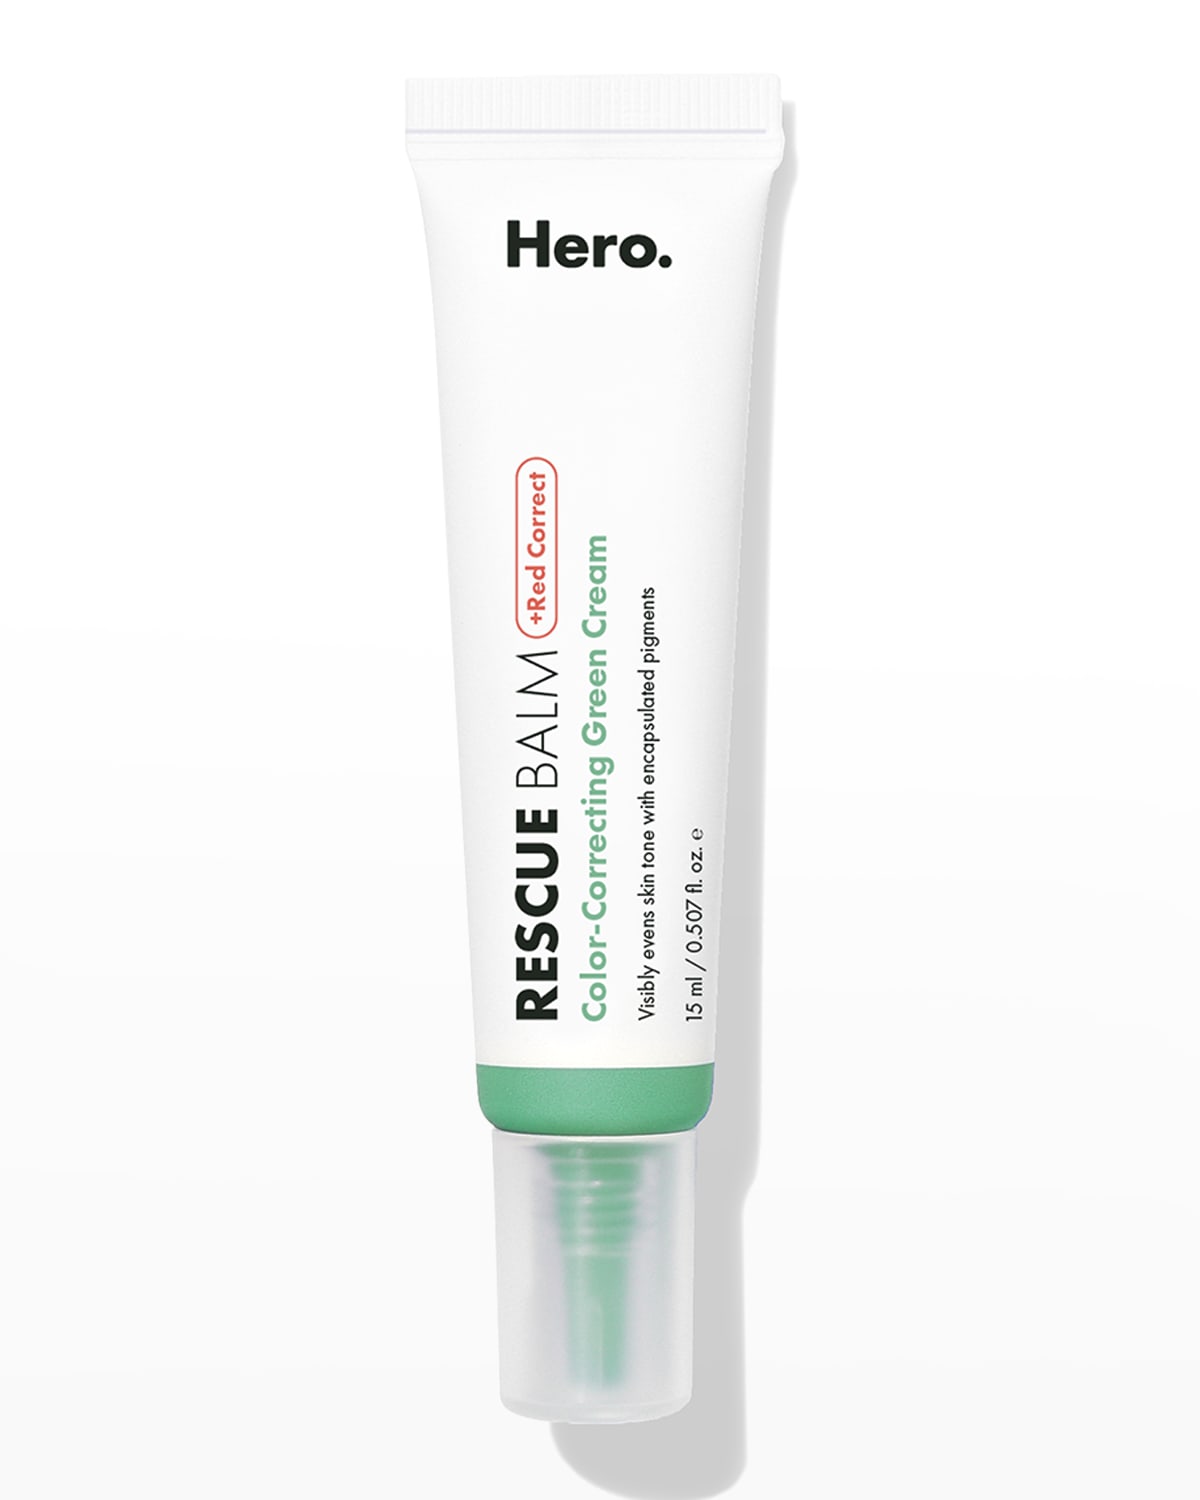 Hero Cosmetics 0.5 oz. Rescue Balm and Red Correct